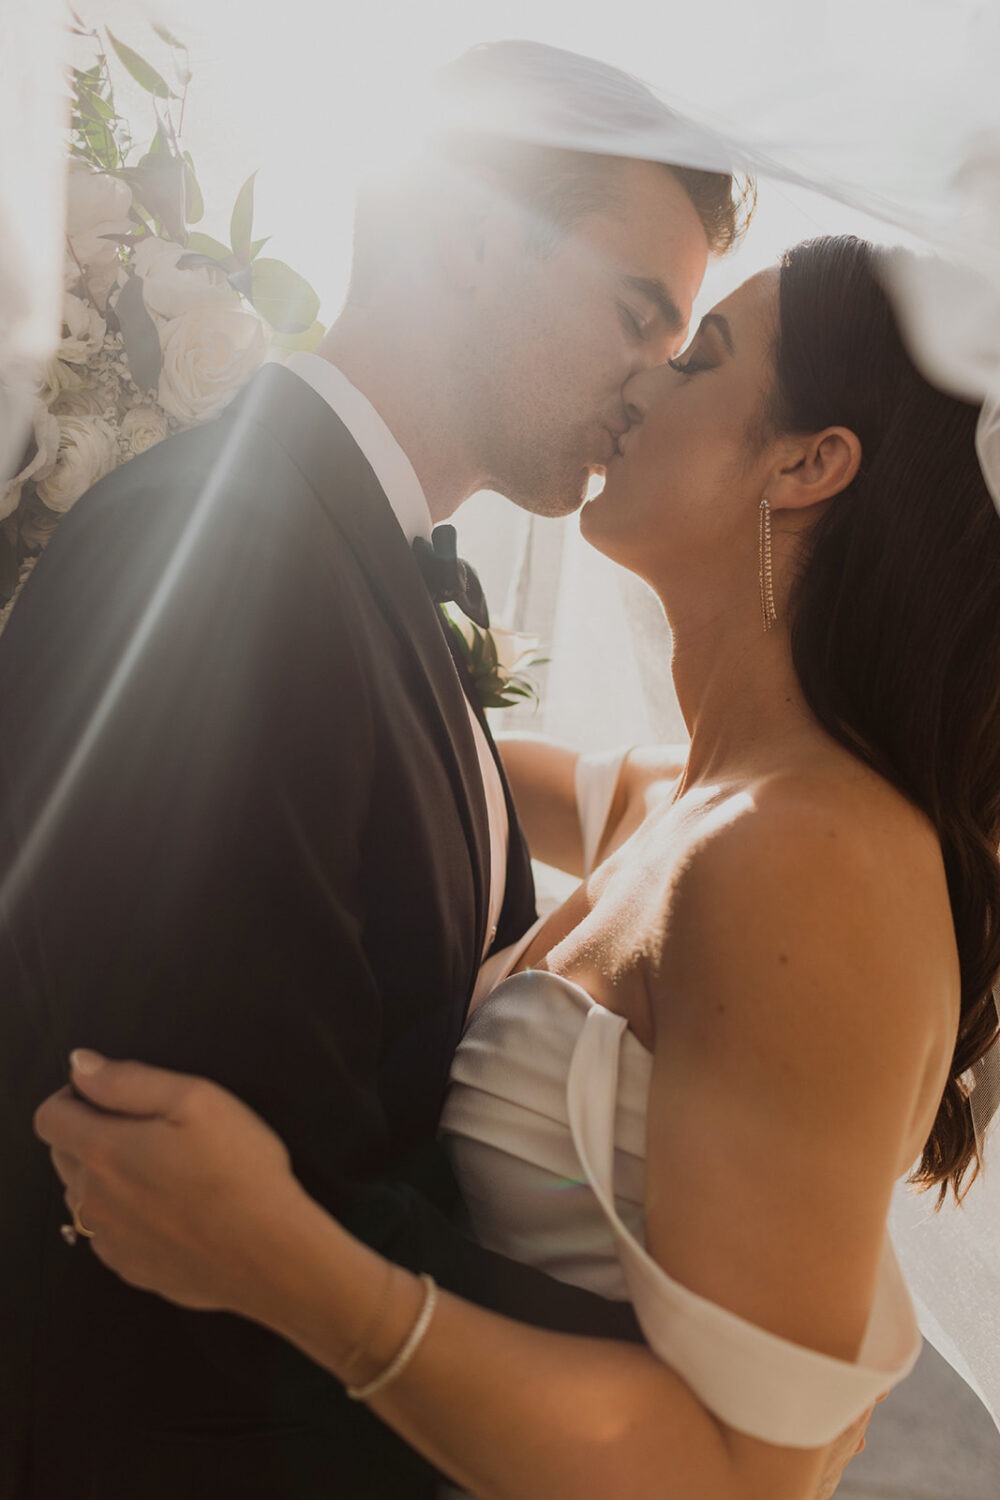 couple kisses under wedding veil at Mt. Washington Mill Dye House wedding venue